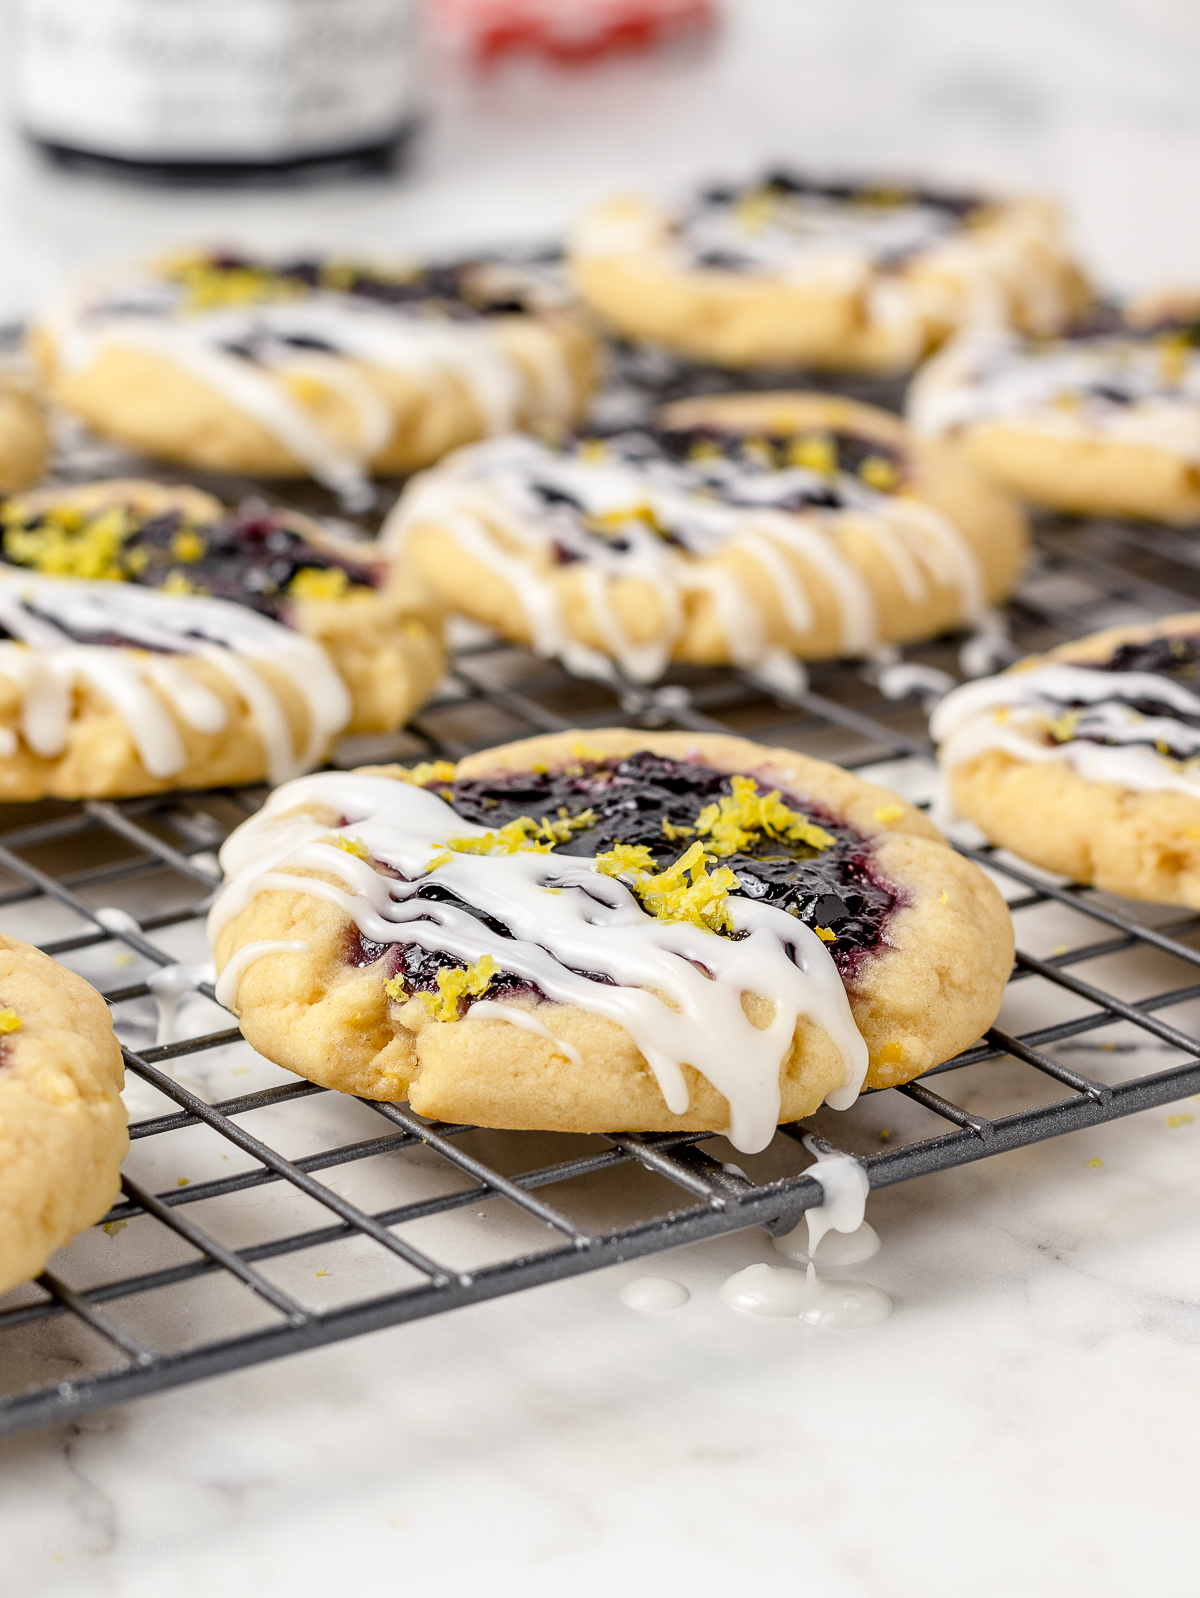 Lemon Blueberry Cookies topped with blueberry jam, lemon glaze, and lemon zest on a cooling rack.